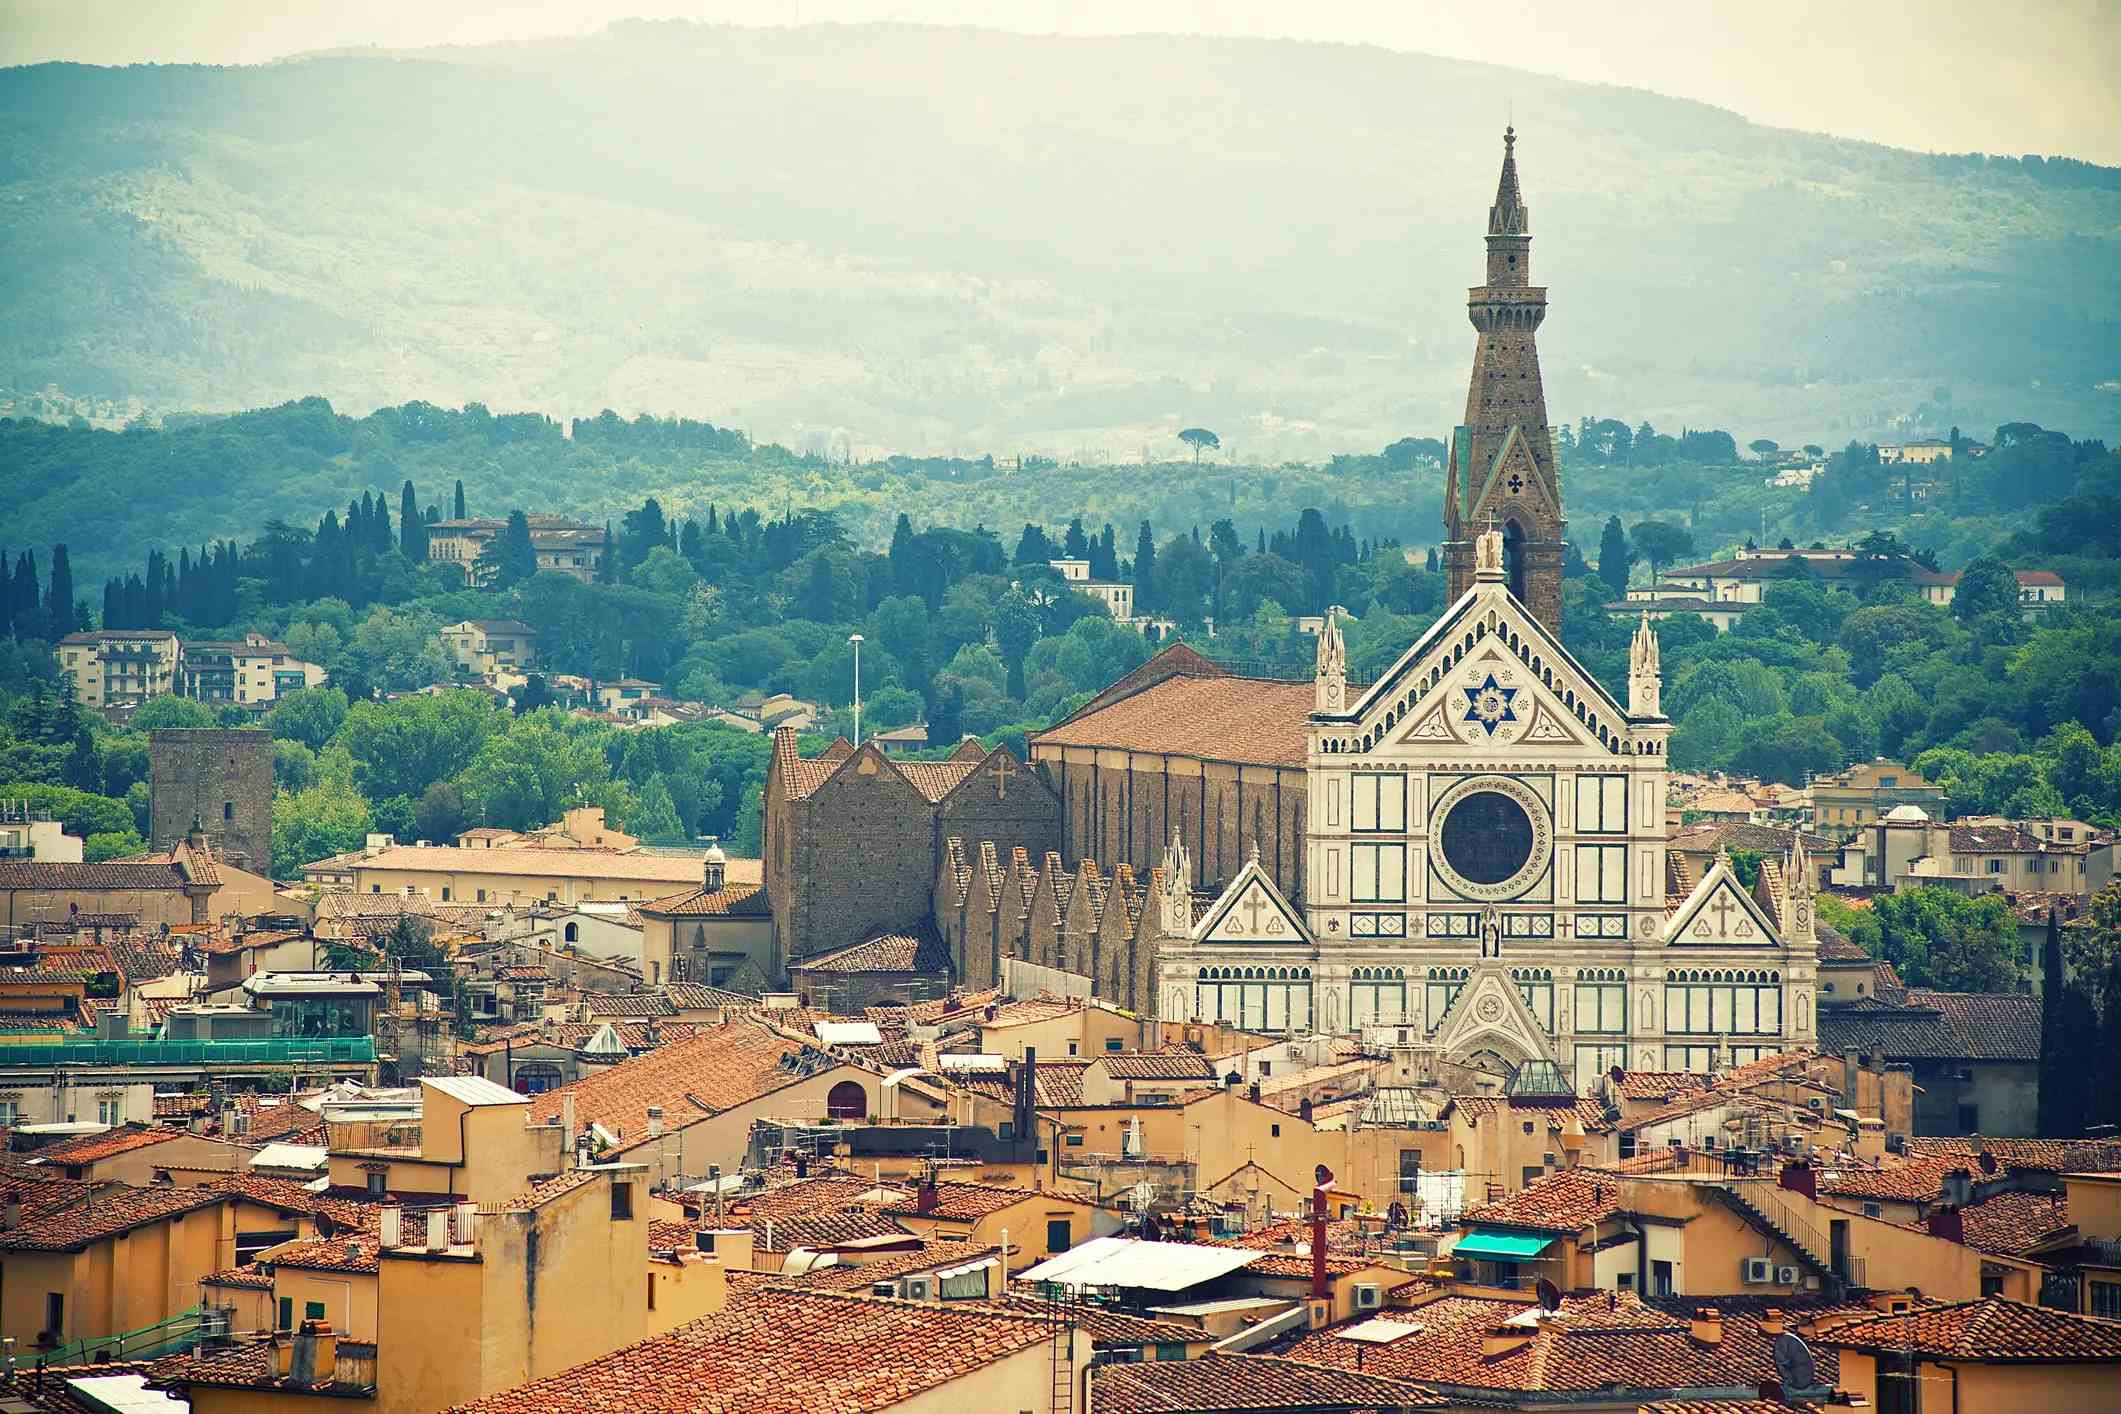 Basilica of Santa Croce in Florence image